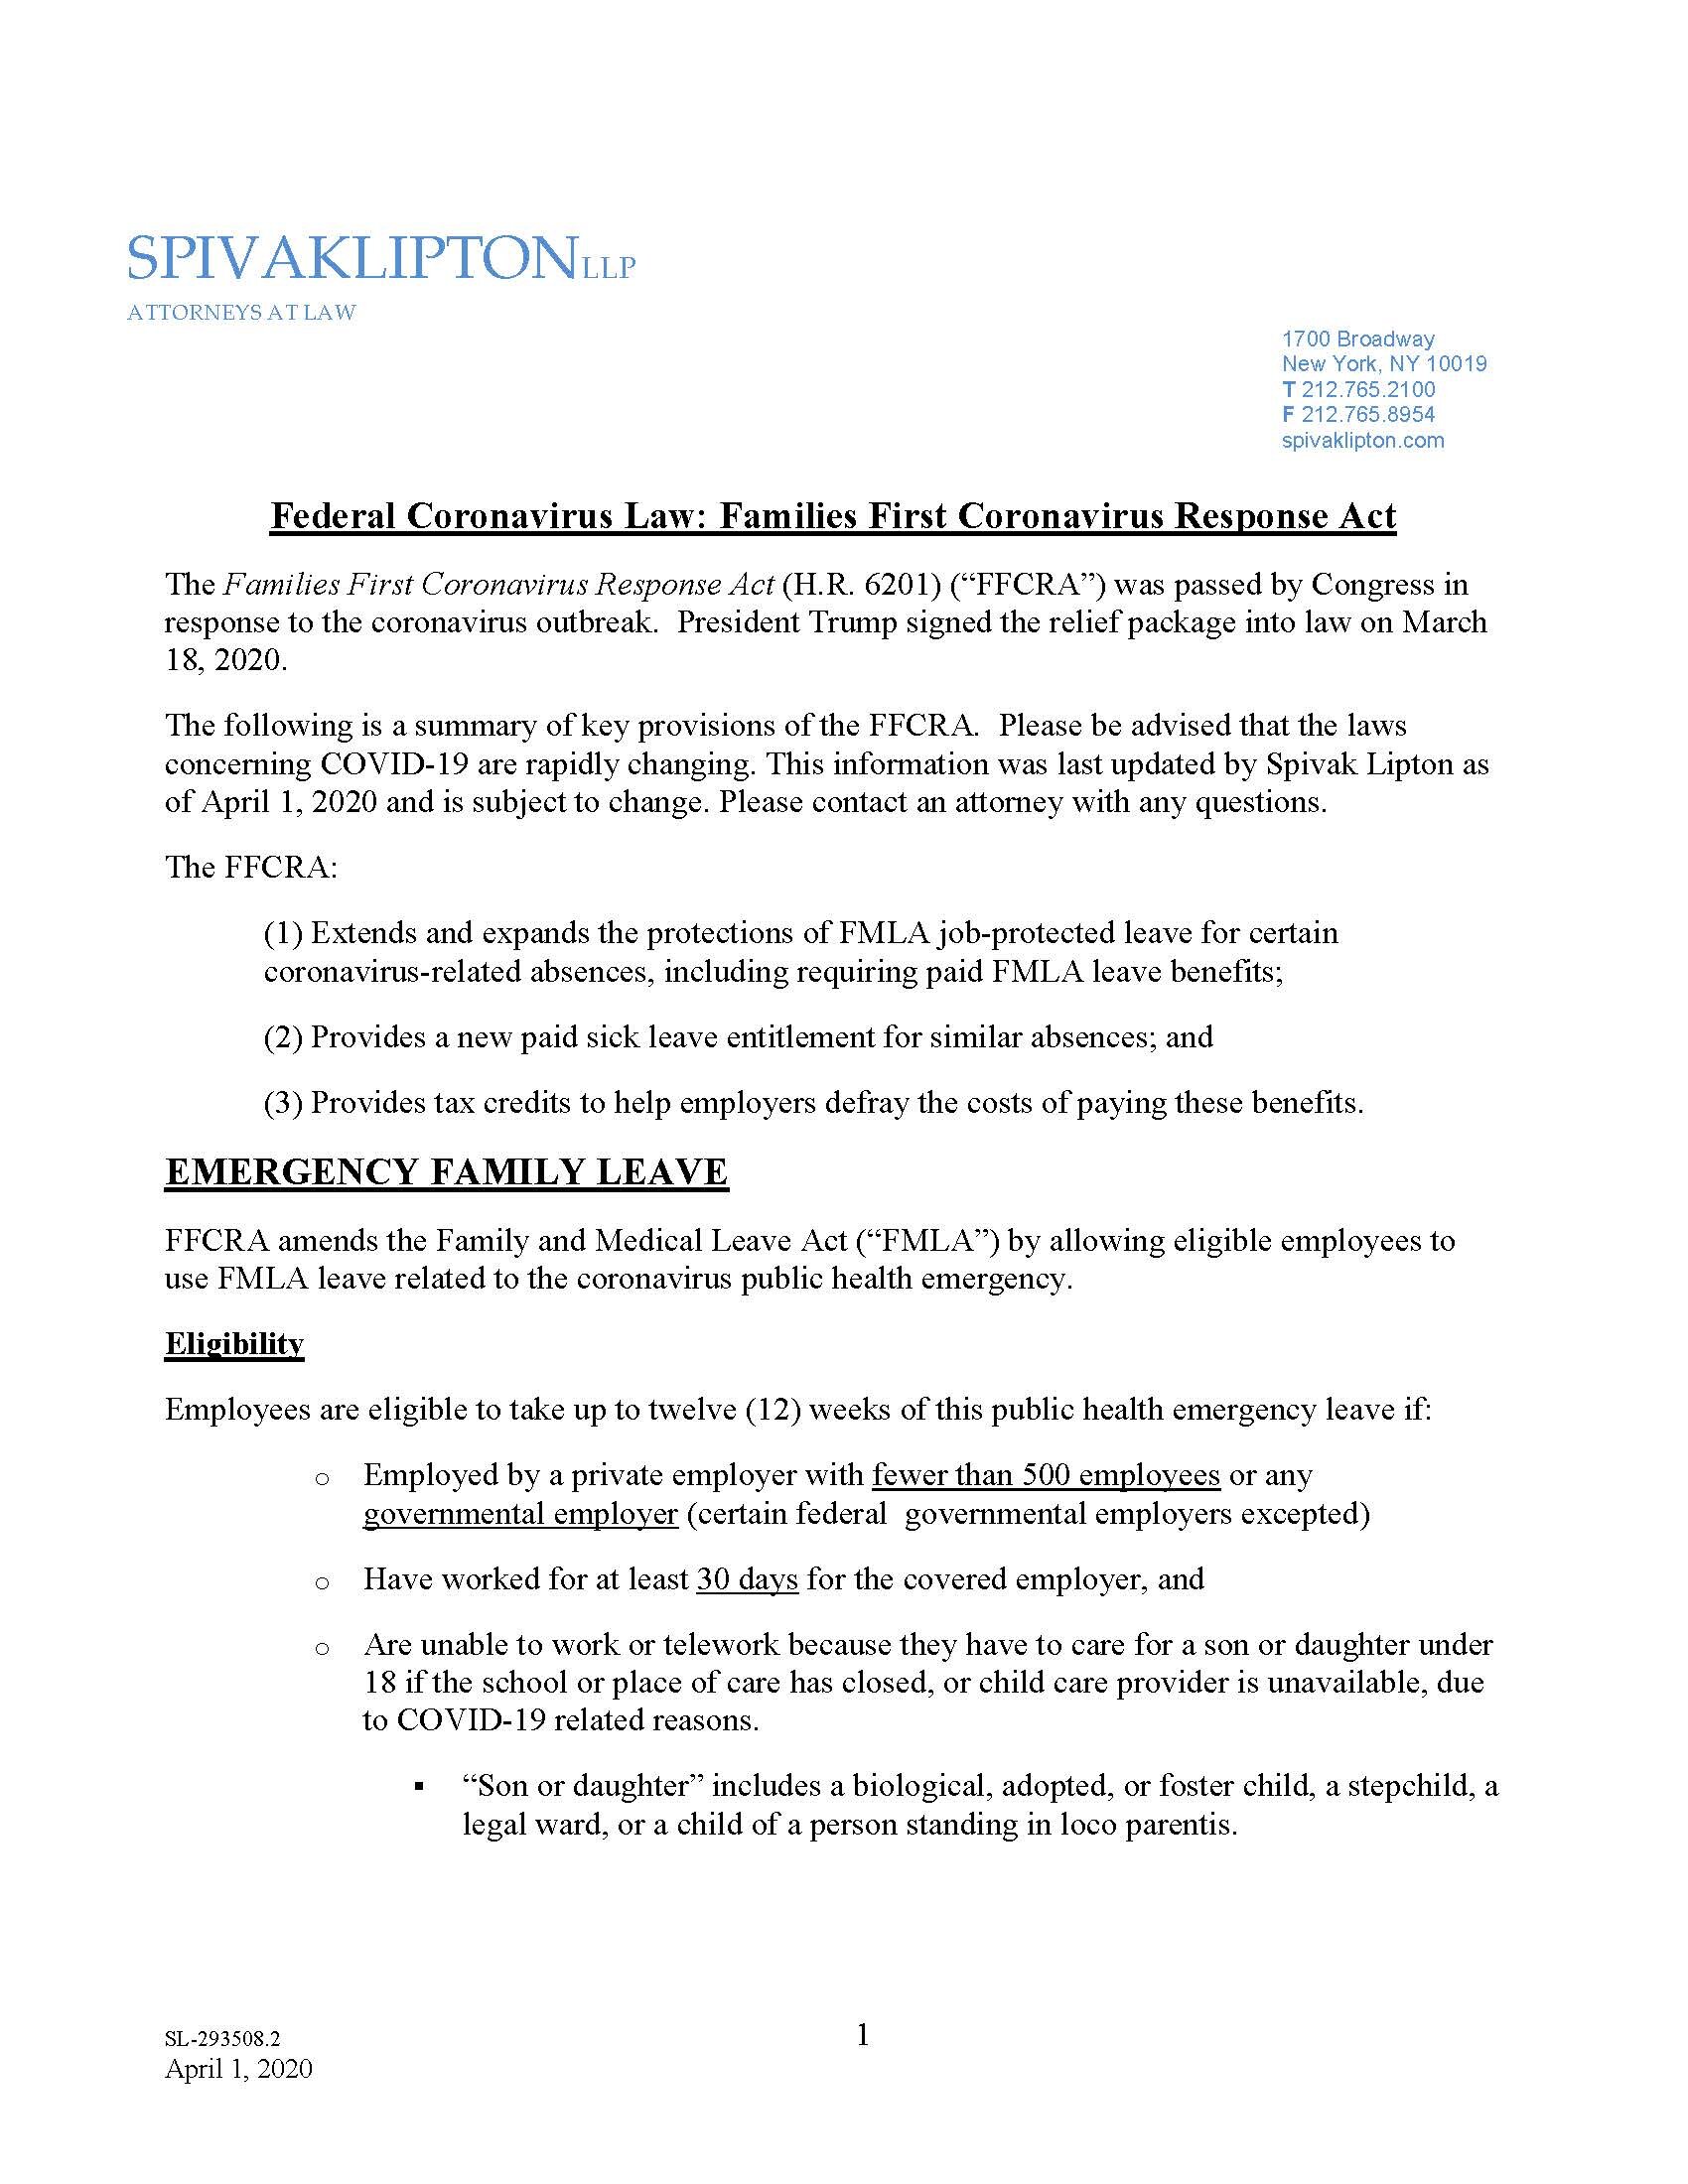 Spviak Lipton Federal Families First Coronavirus Response Act Summary (as of 4.1.20)_Page_1.jpg